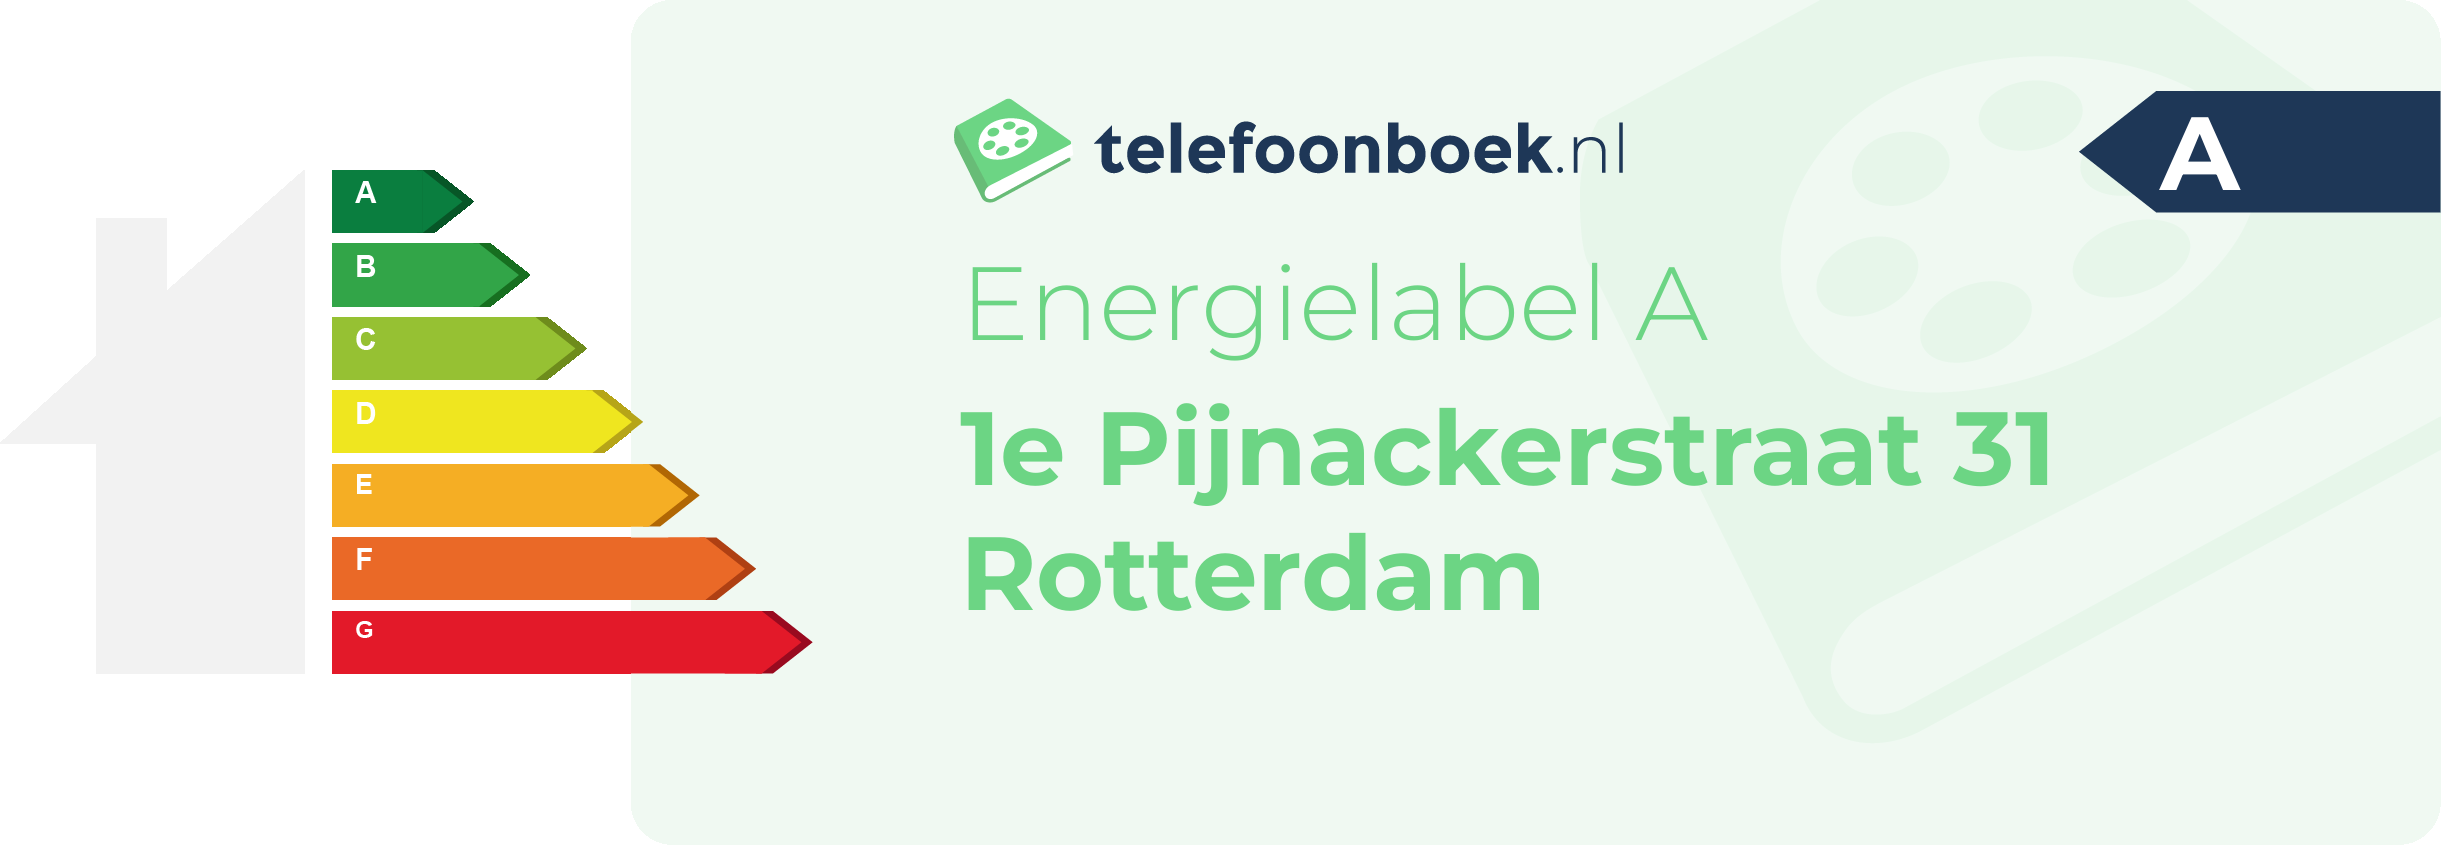 Energielabel 1e Pijnackerstraat 31 Rotterdam